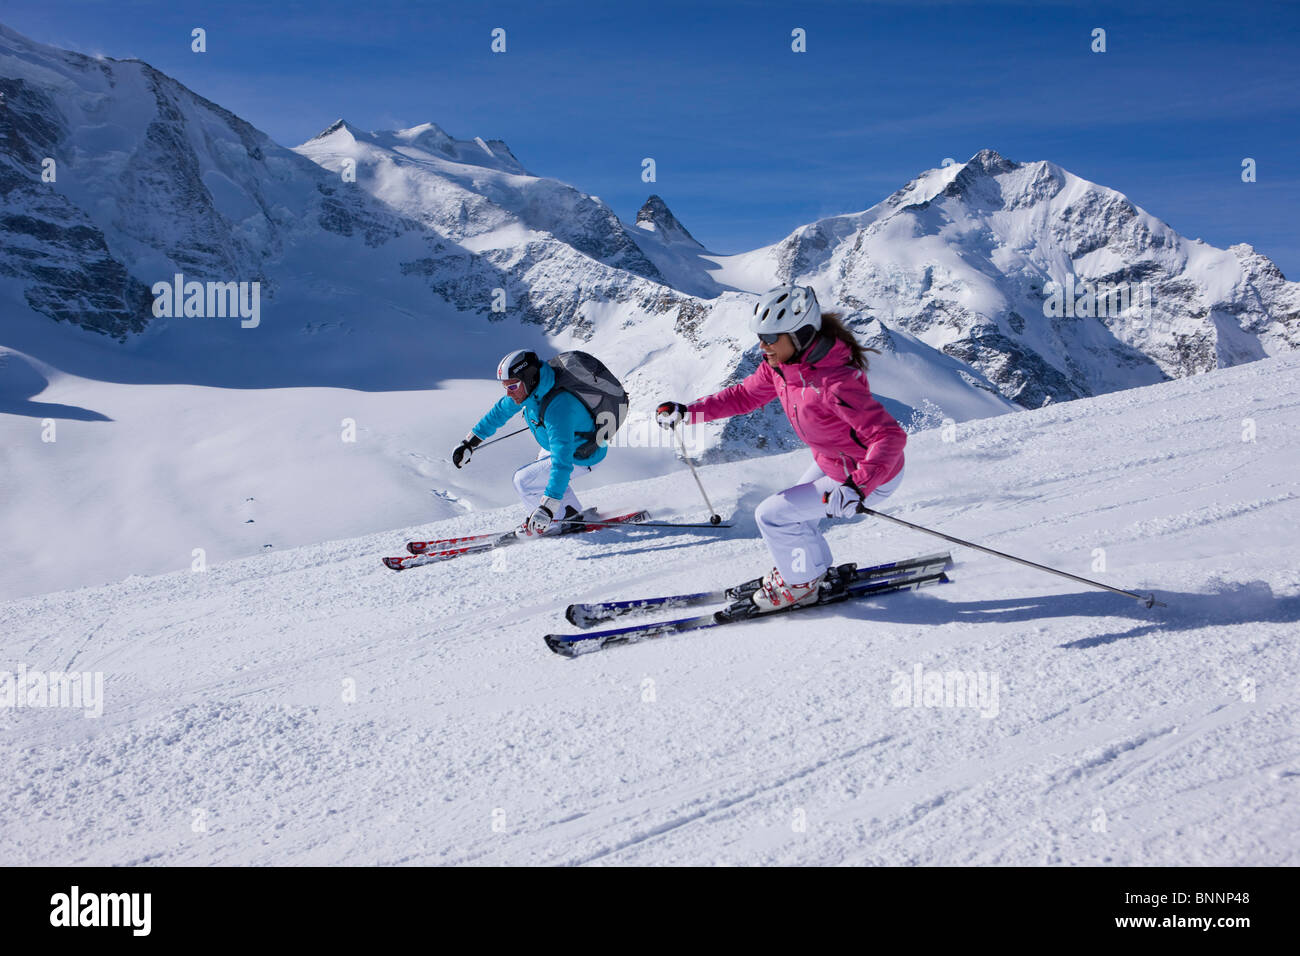 Alps ski skiing. Горные лыжи Альпы. Горные лыжи Куршевель. Швейцария Альпы горнолыжка. Швейцария горные лыжи.